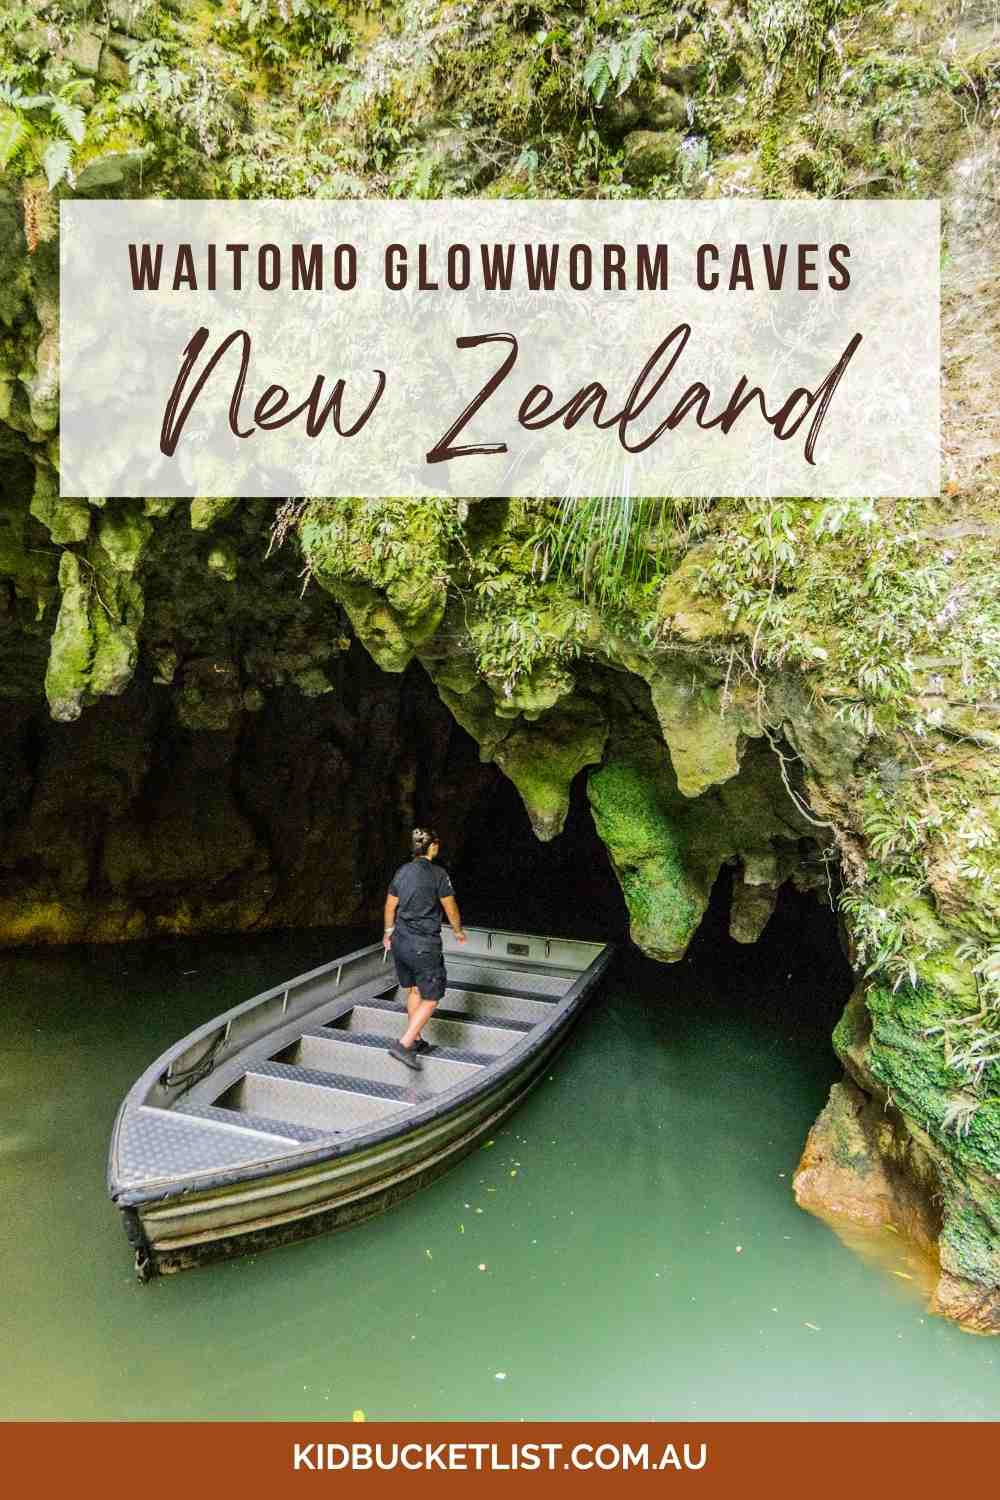 Exploring Waitomo Glowworm Caves with kids